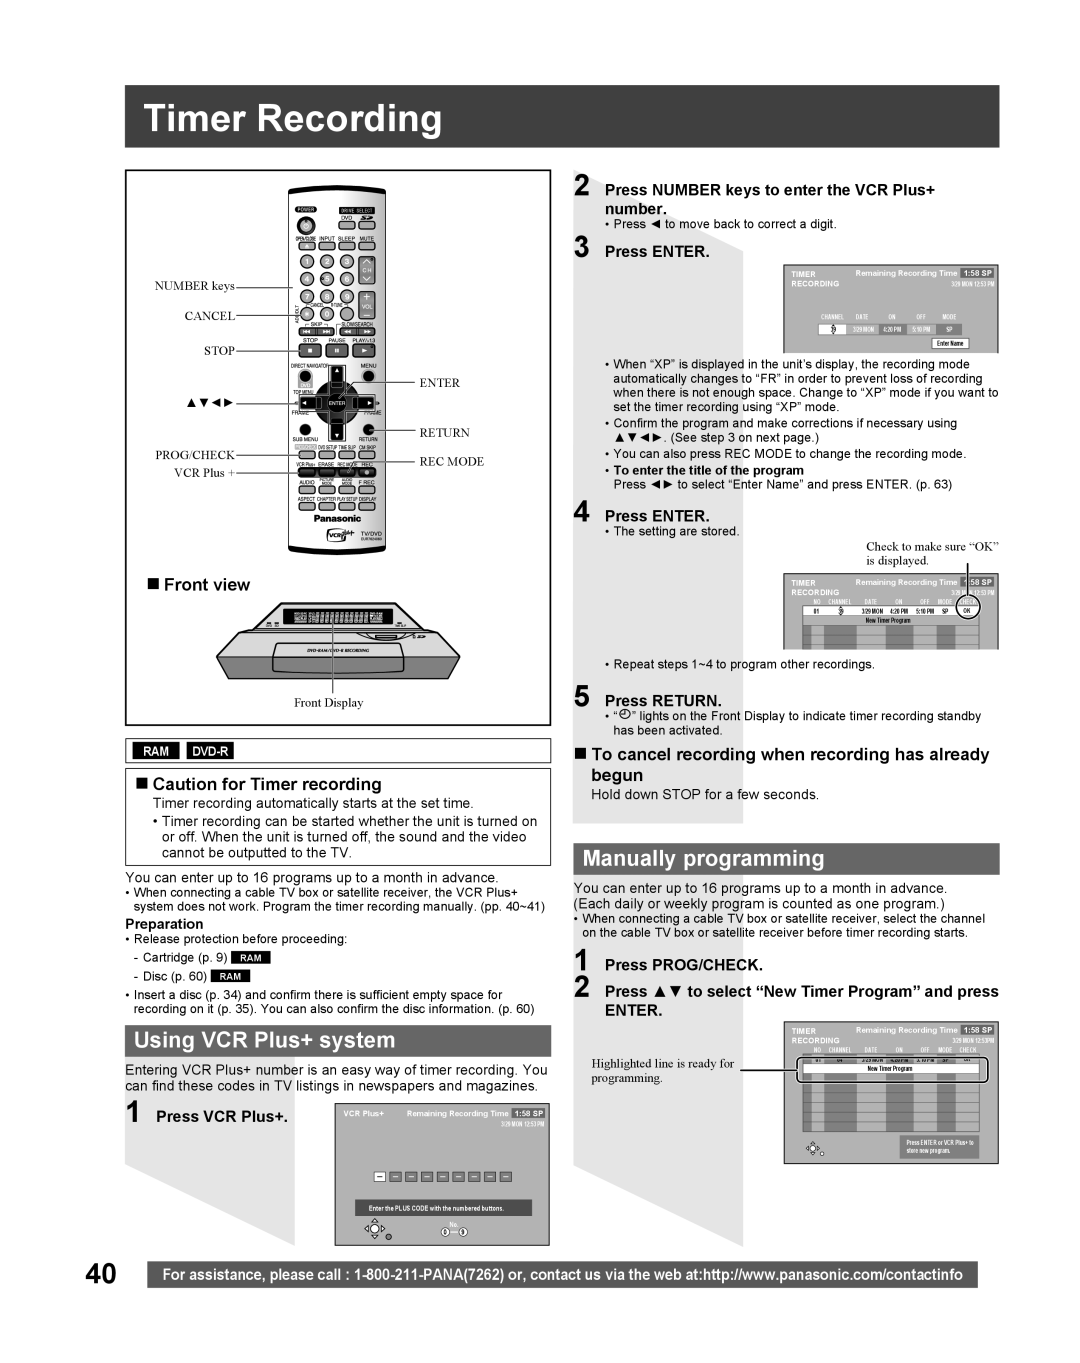 Panasonic TC 22LR30 Timer Recording, Using VCR Plus+ system, Manually programming, Caution for Timer recording, begun 